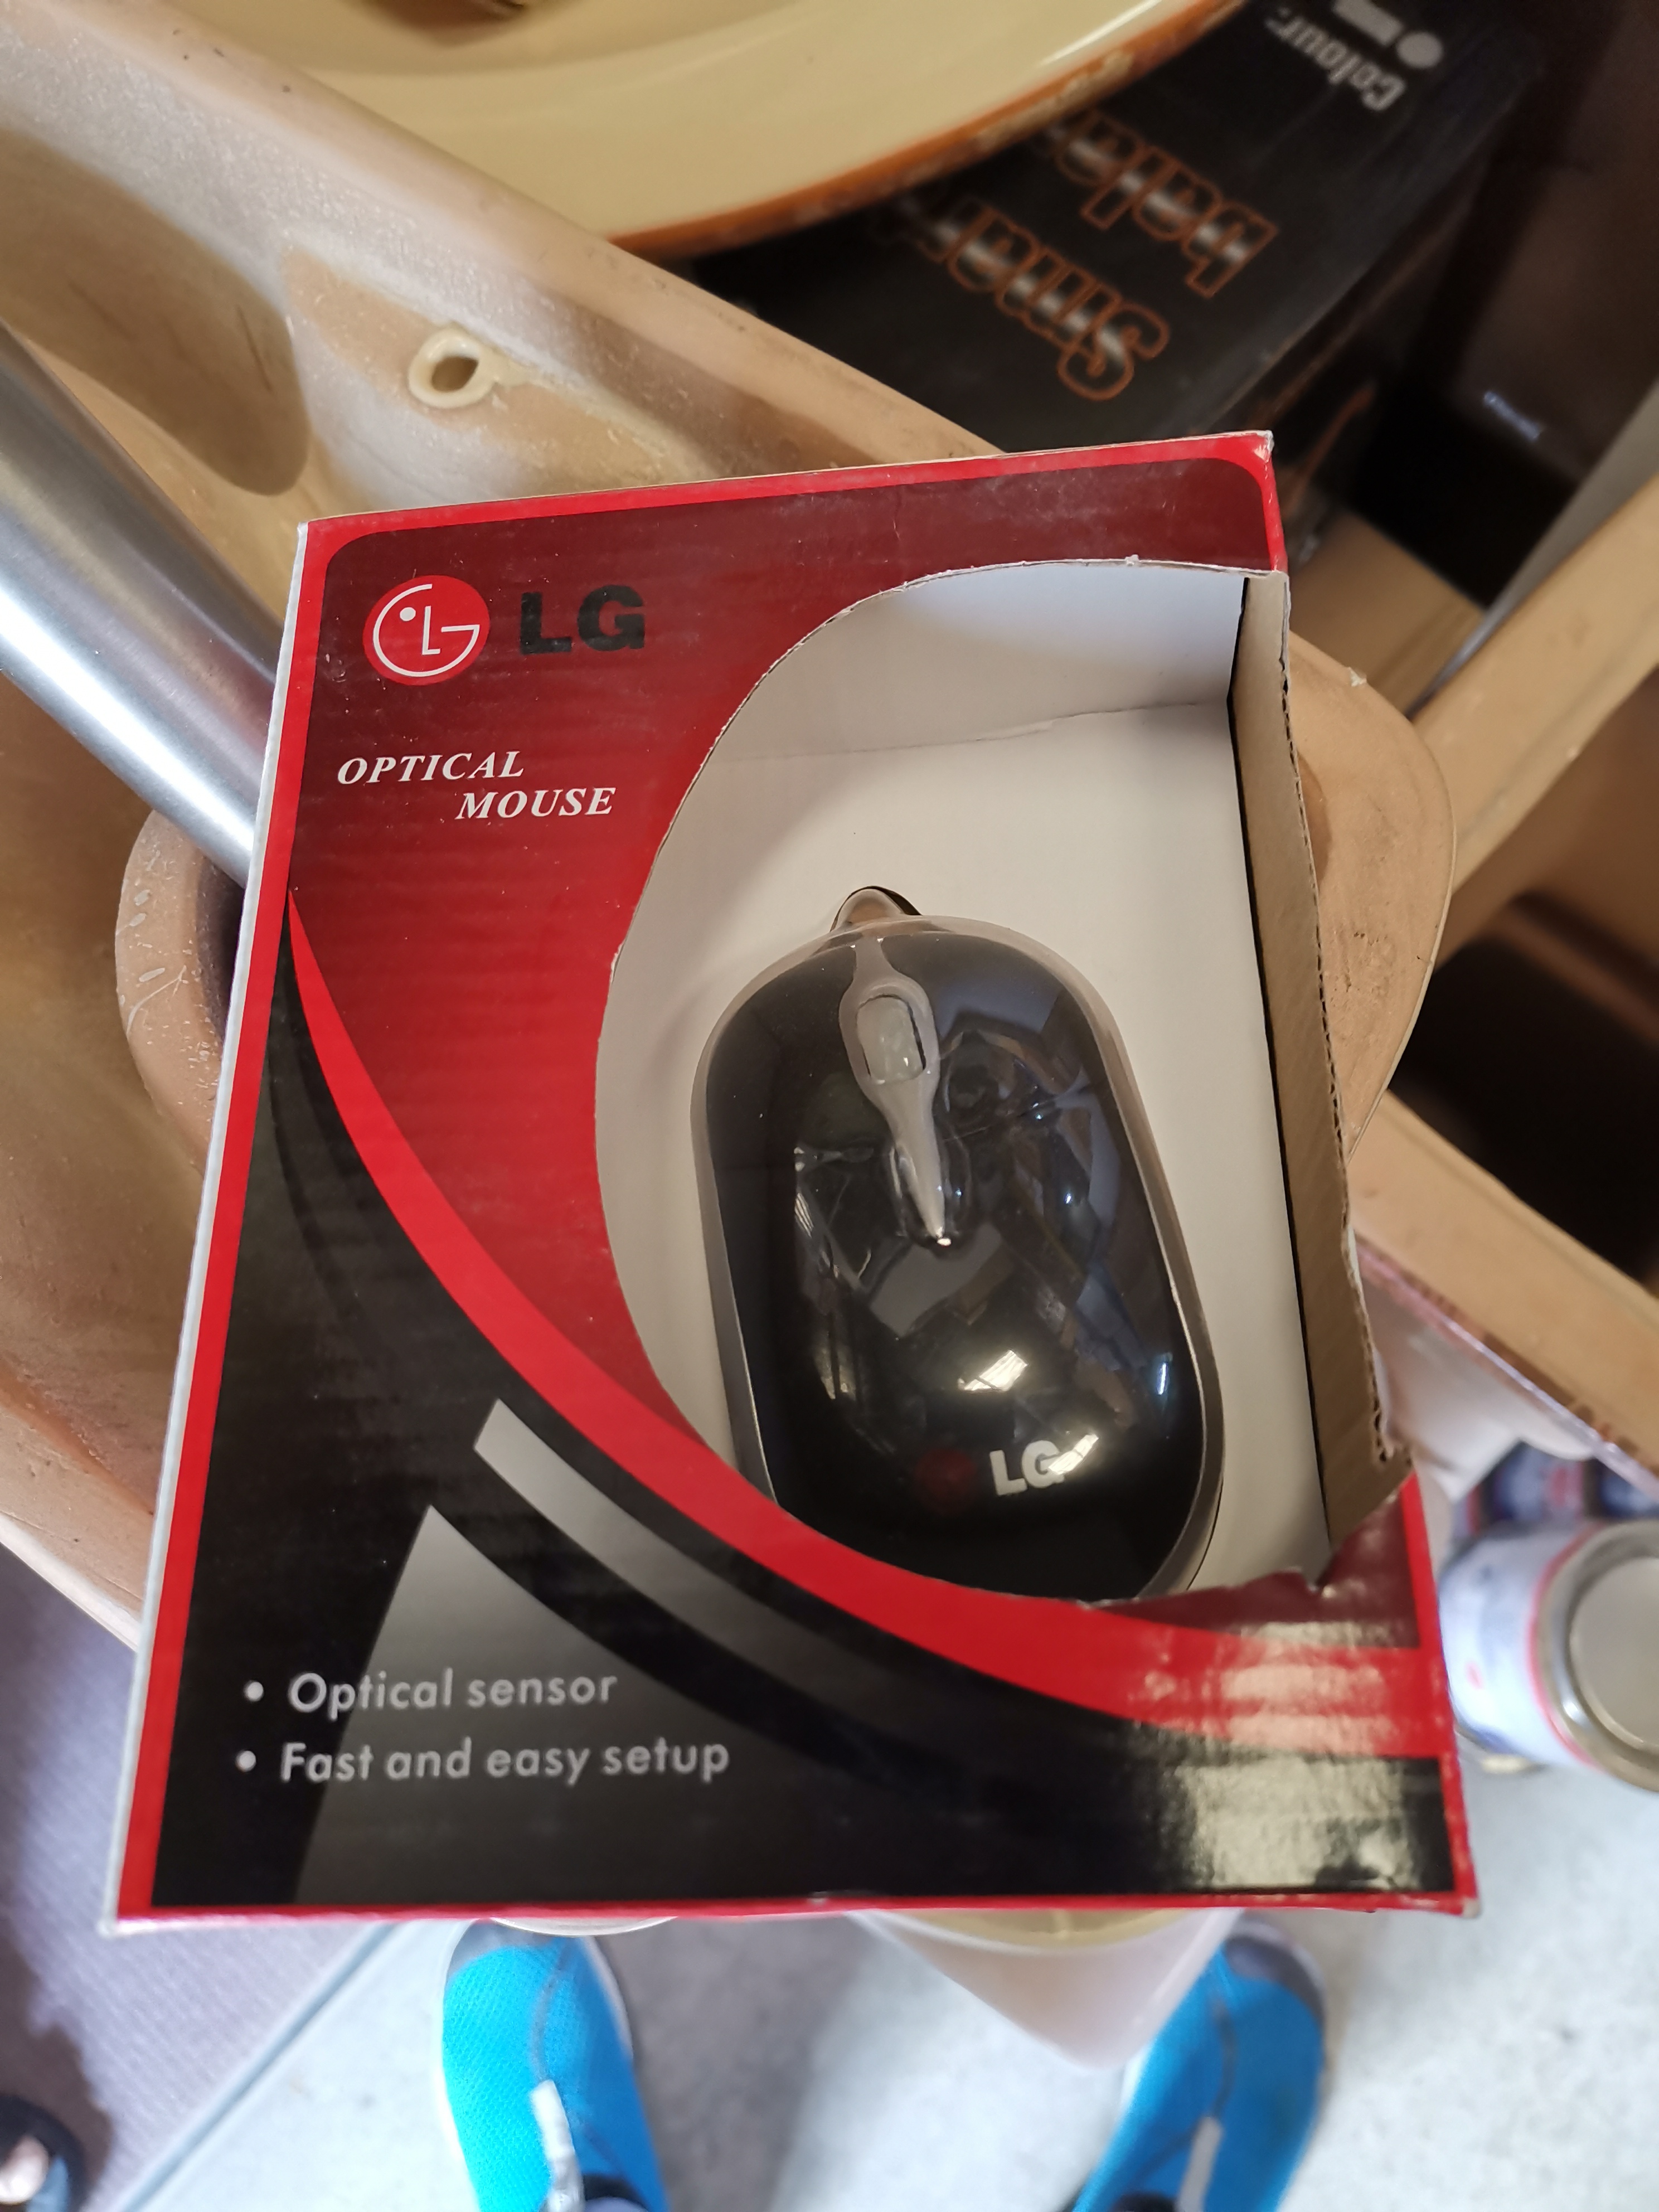 Lg optical mouse